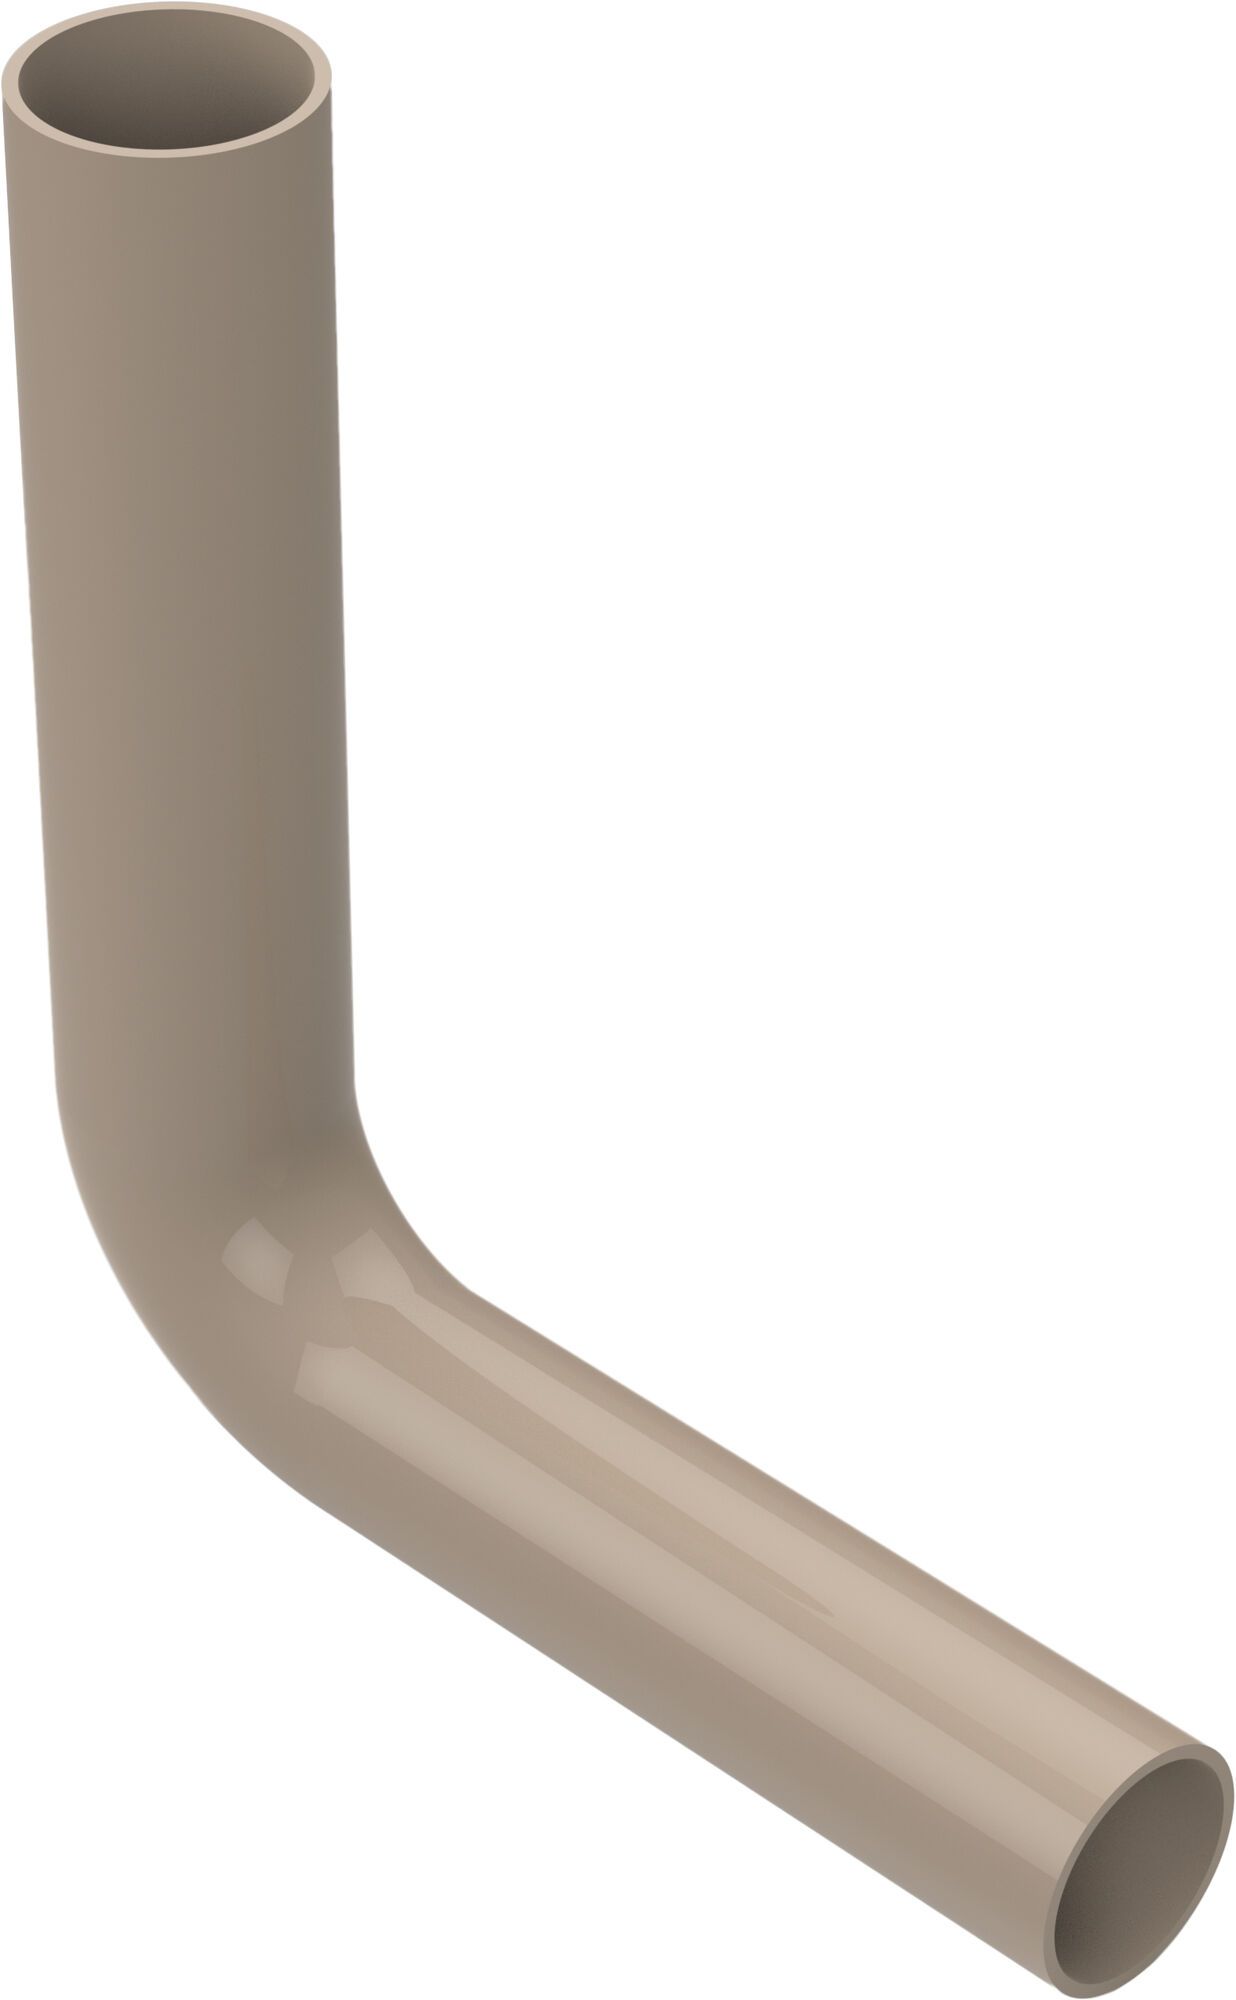 Flush pipe elbow, 230 x 210 mm, beige